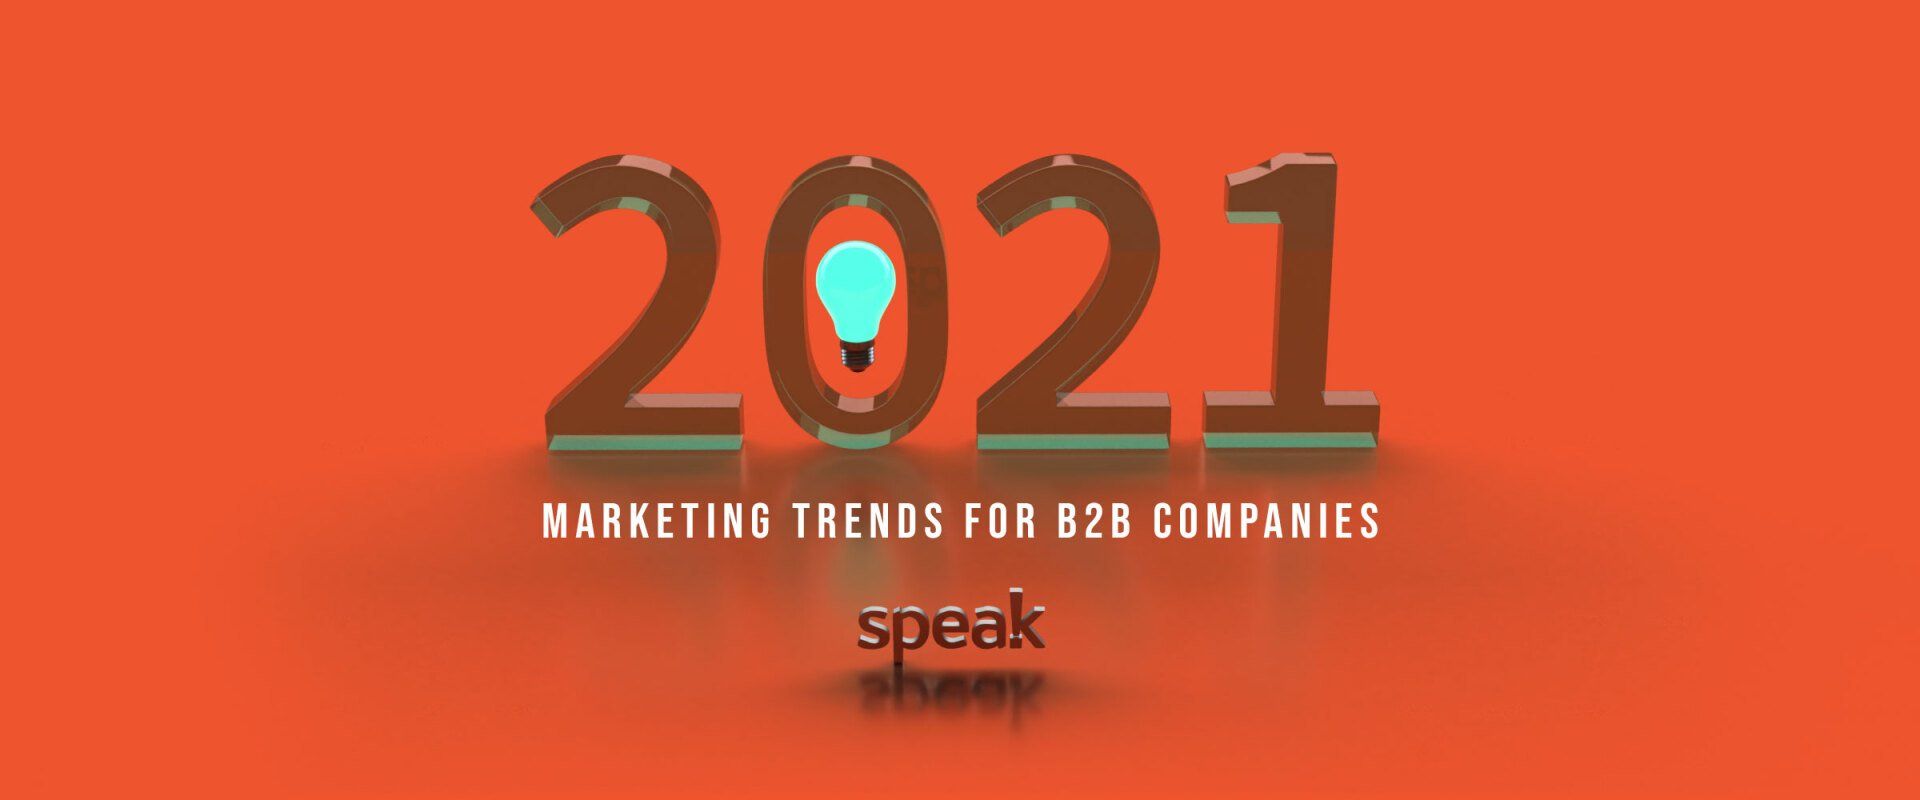 2021 Marketing Trends for B2B Companies